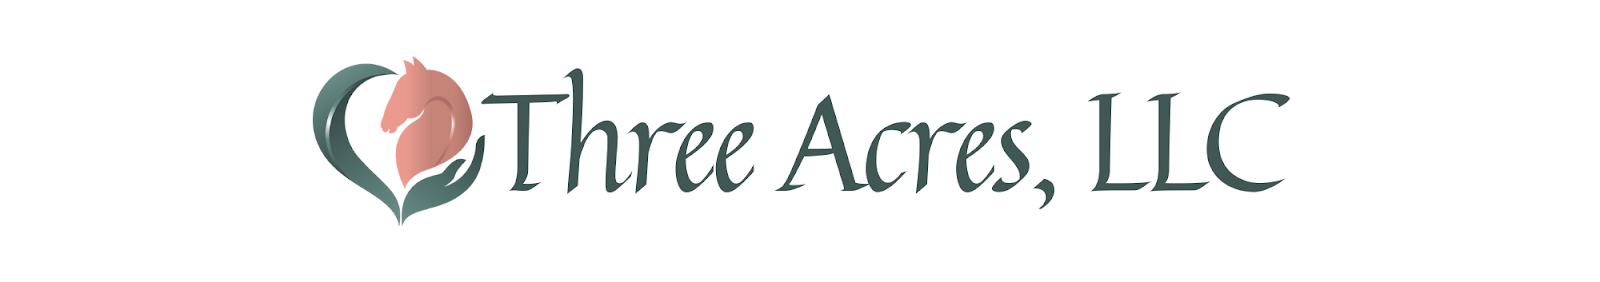 Three Acres LLC - Blog